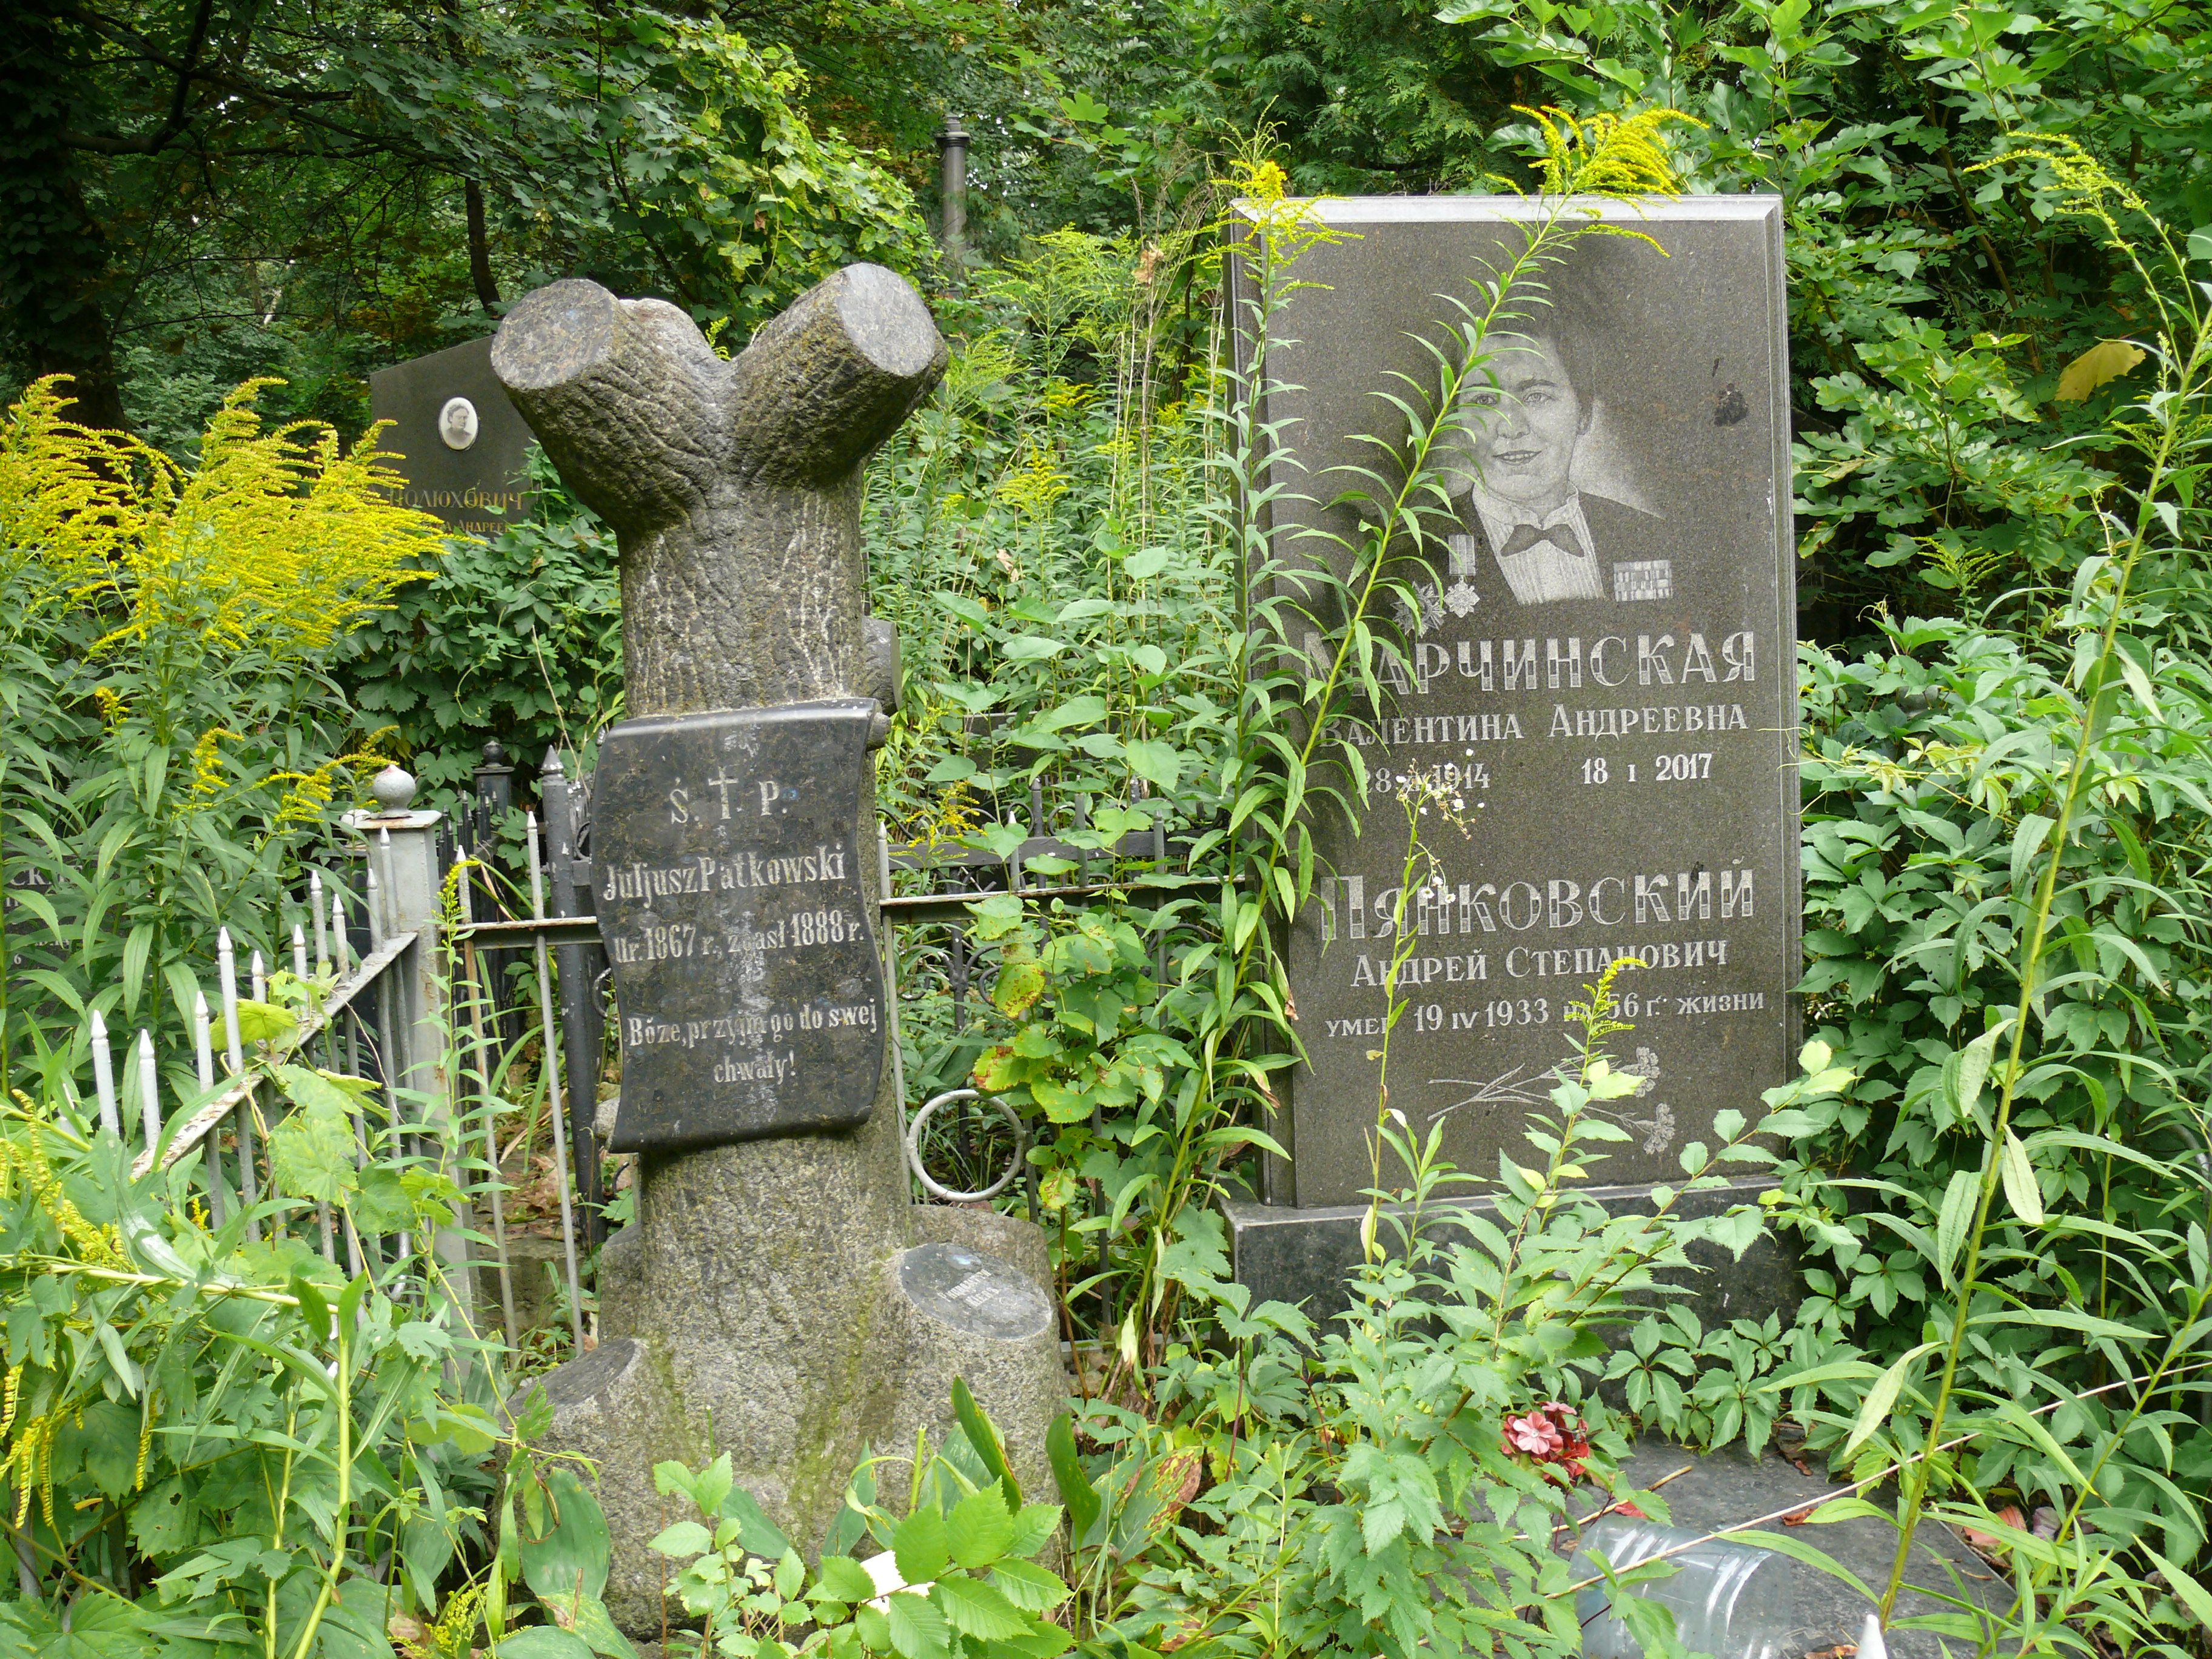 Tombstone of Yuli Patkovsky, Baykova cemetery, Kyiv, 2021